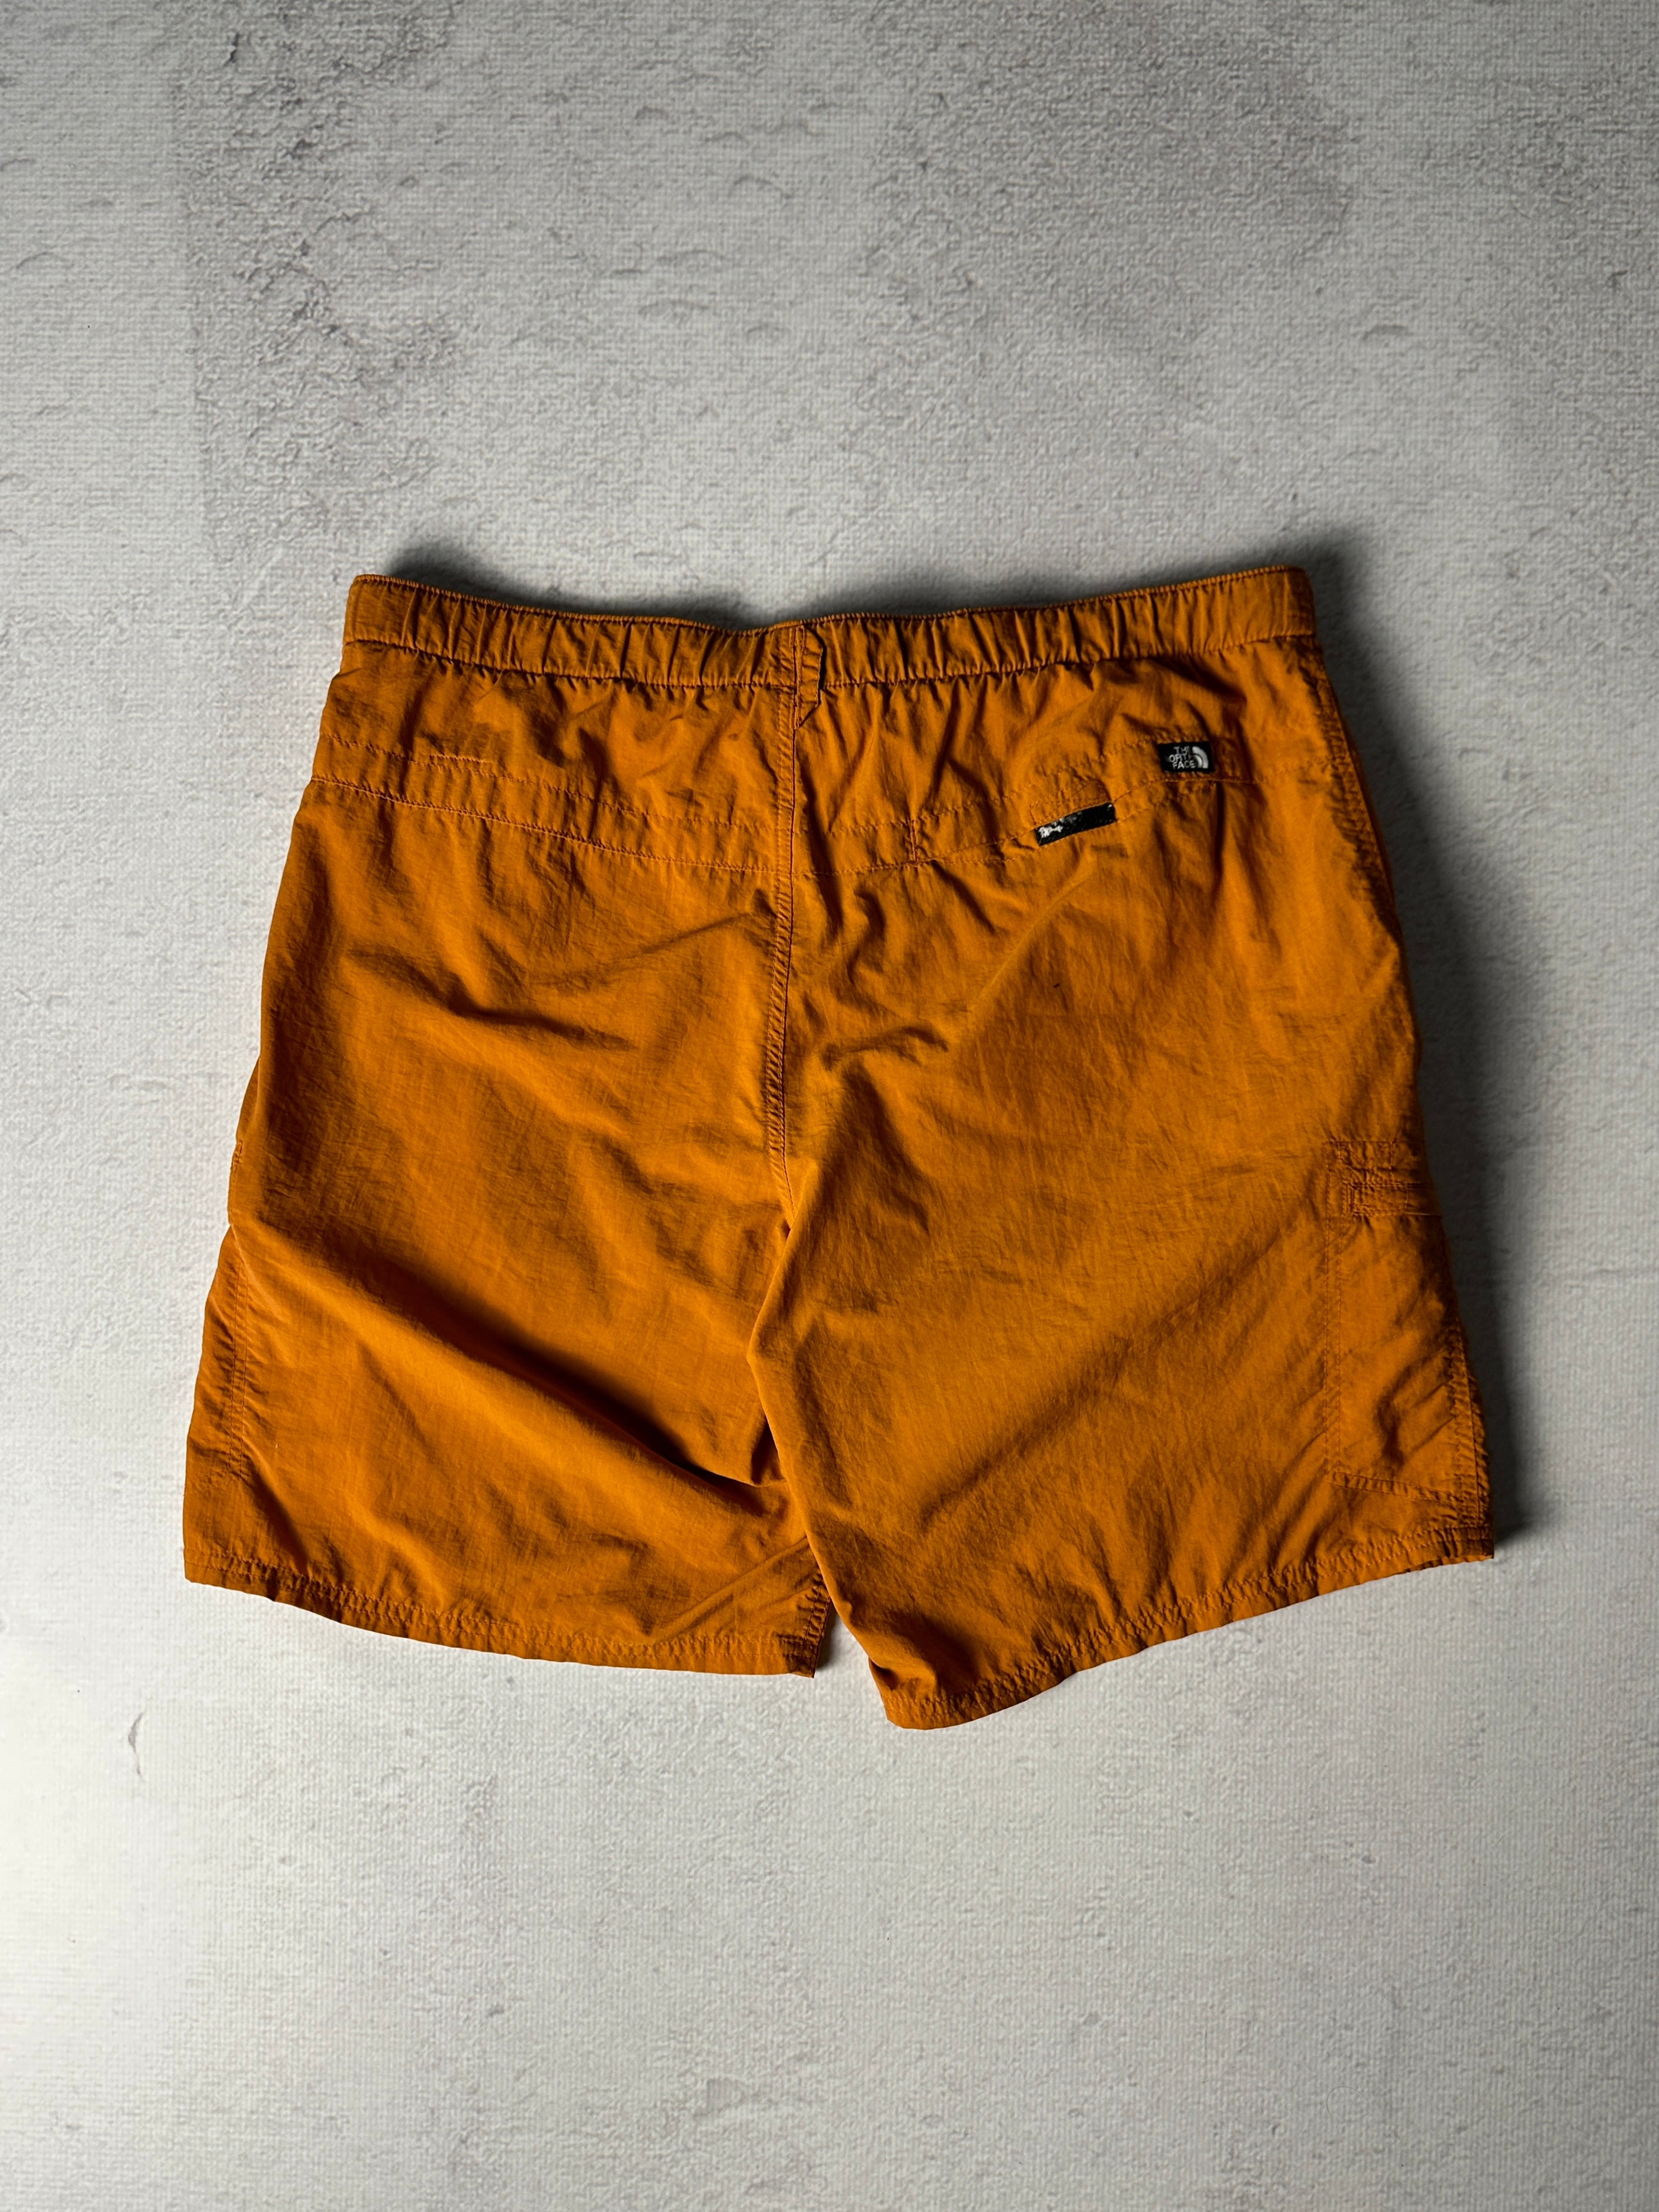 Vintage The North Face Shorts - Men's Medium